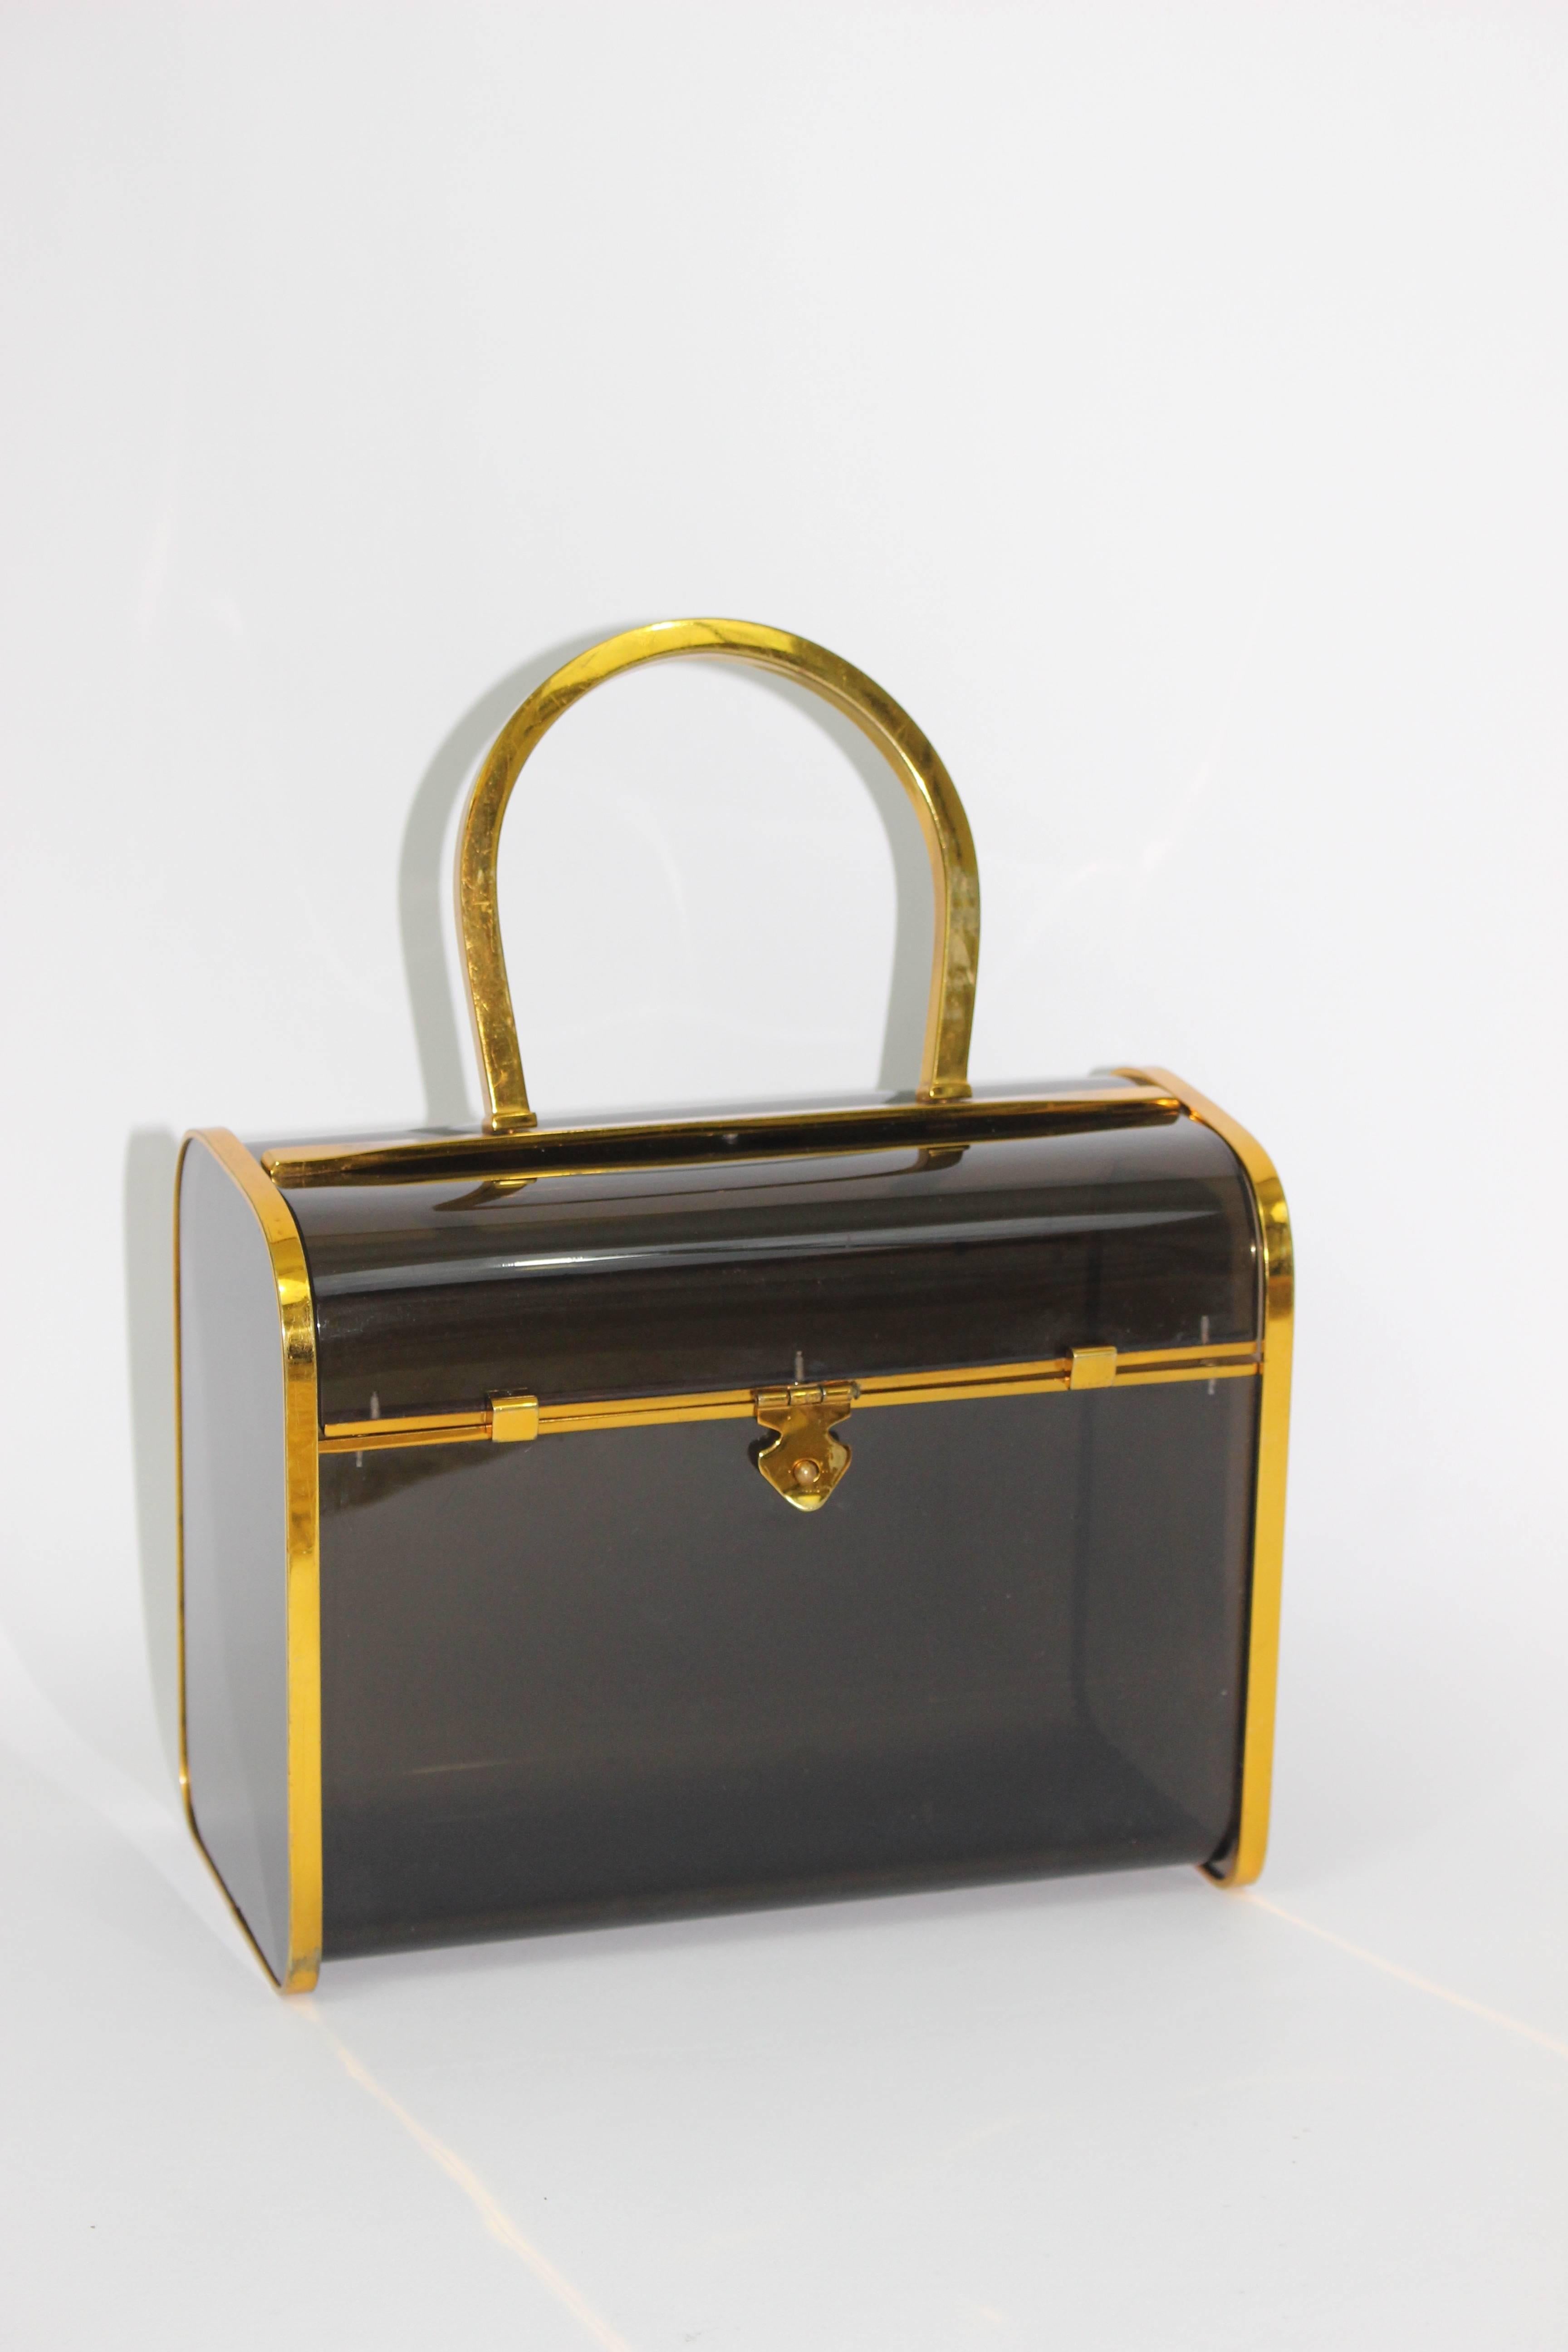 Judith Leiber Smoke Lucite & Brass Top Handle Bag/ Purse Vintage C1960s 5